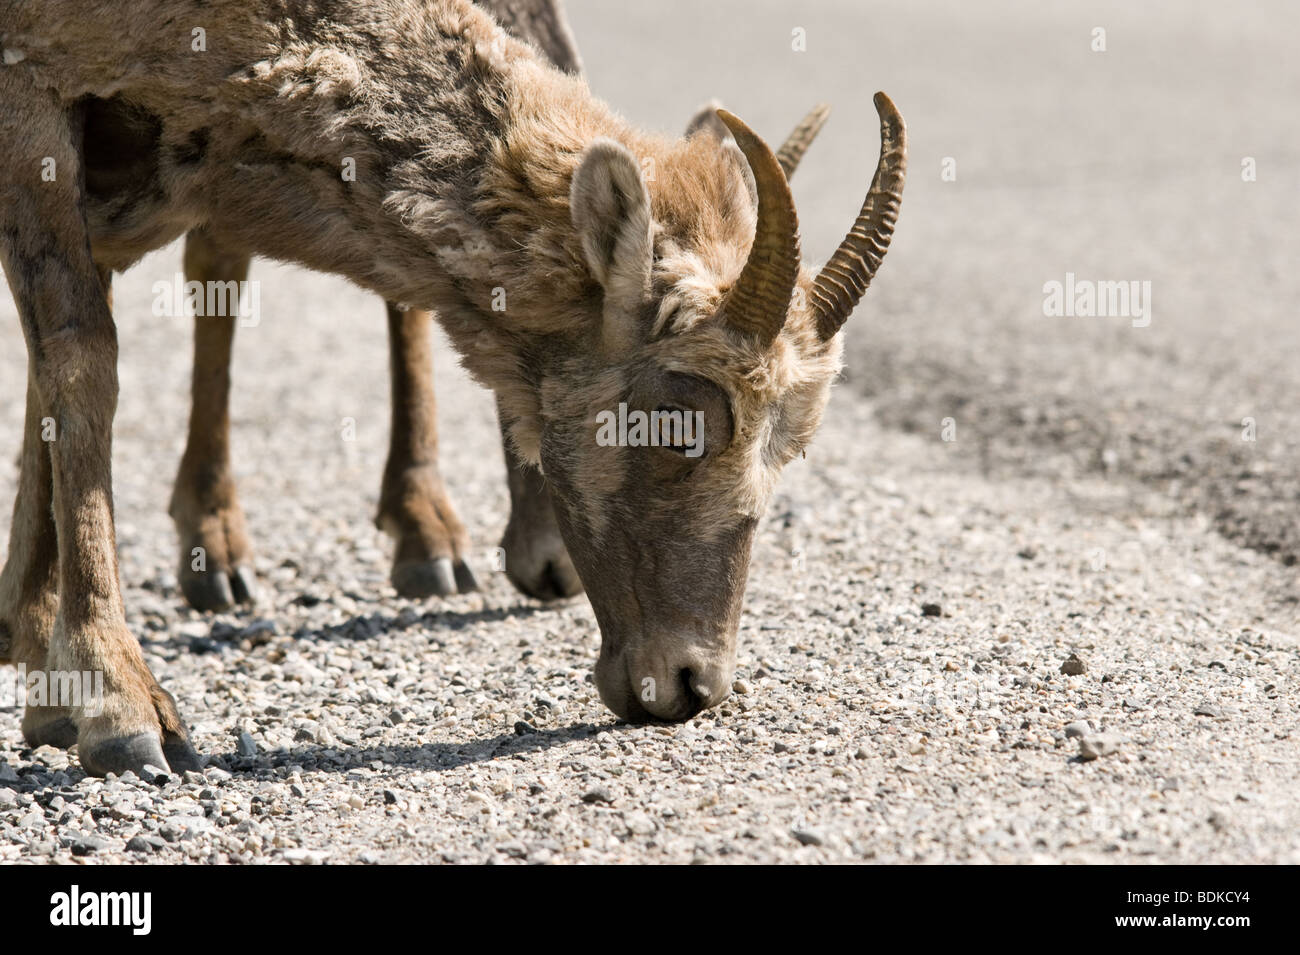 Big horn sheep grazing off road salt Stock Photo